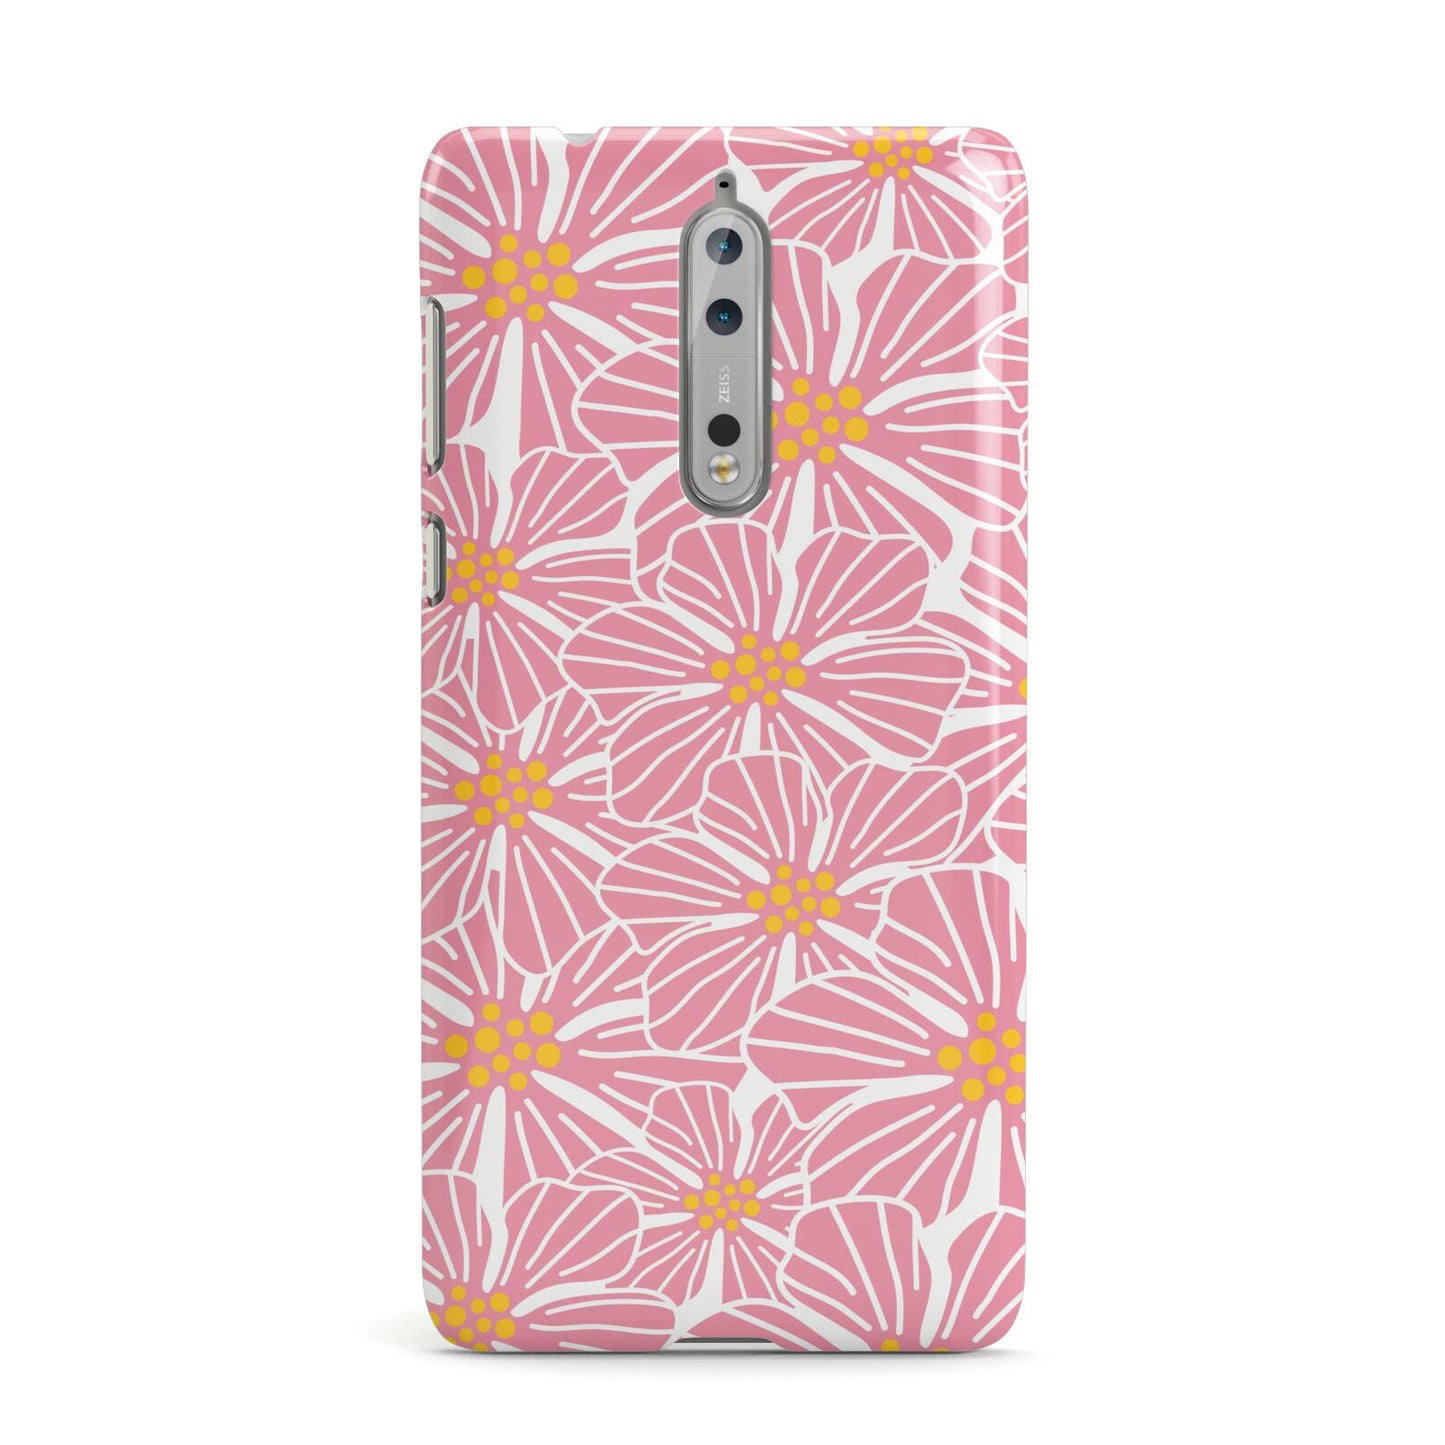 Pink Flowers Nokia Case